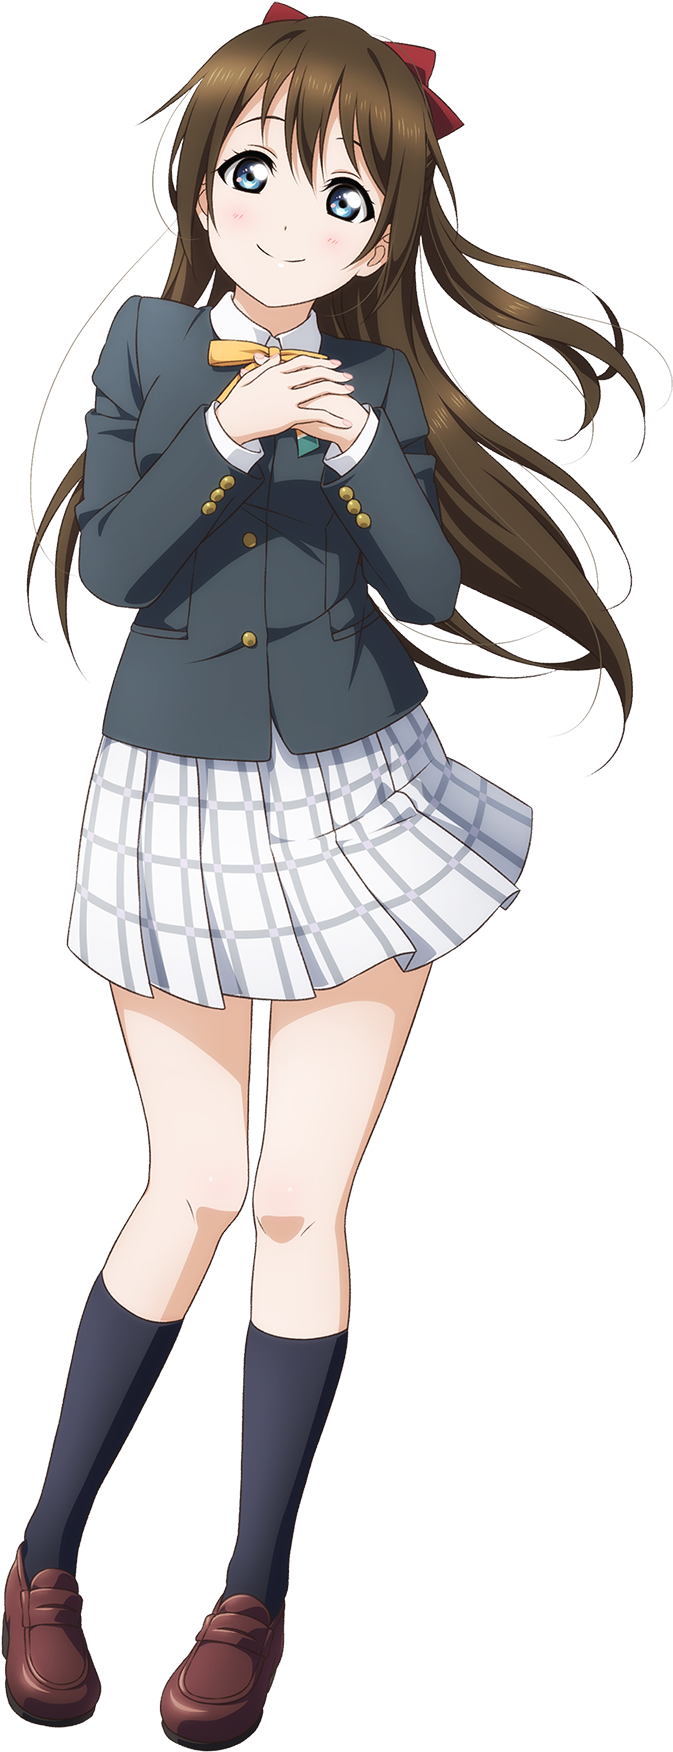 Anime Schoolgirl Smiling Pose PNG